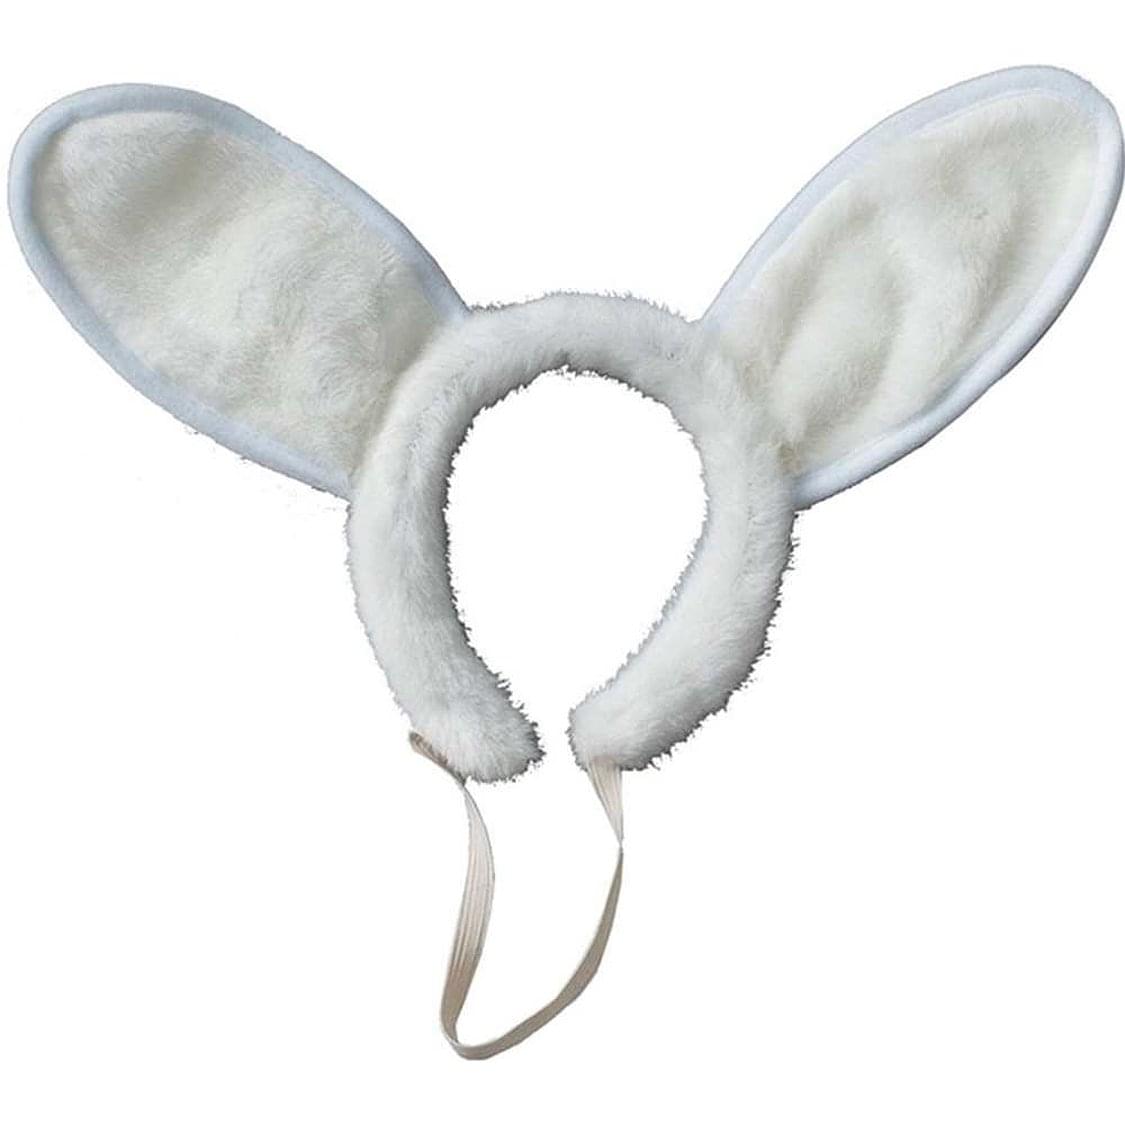 White Bunny Ears